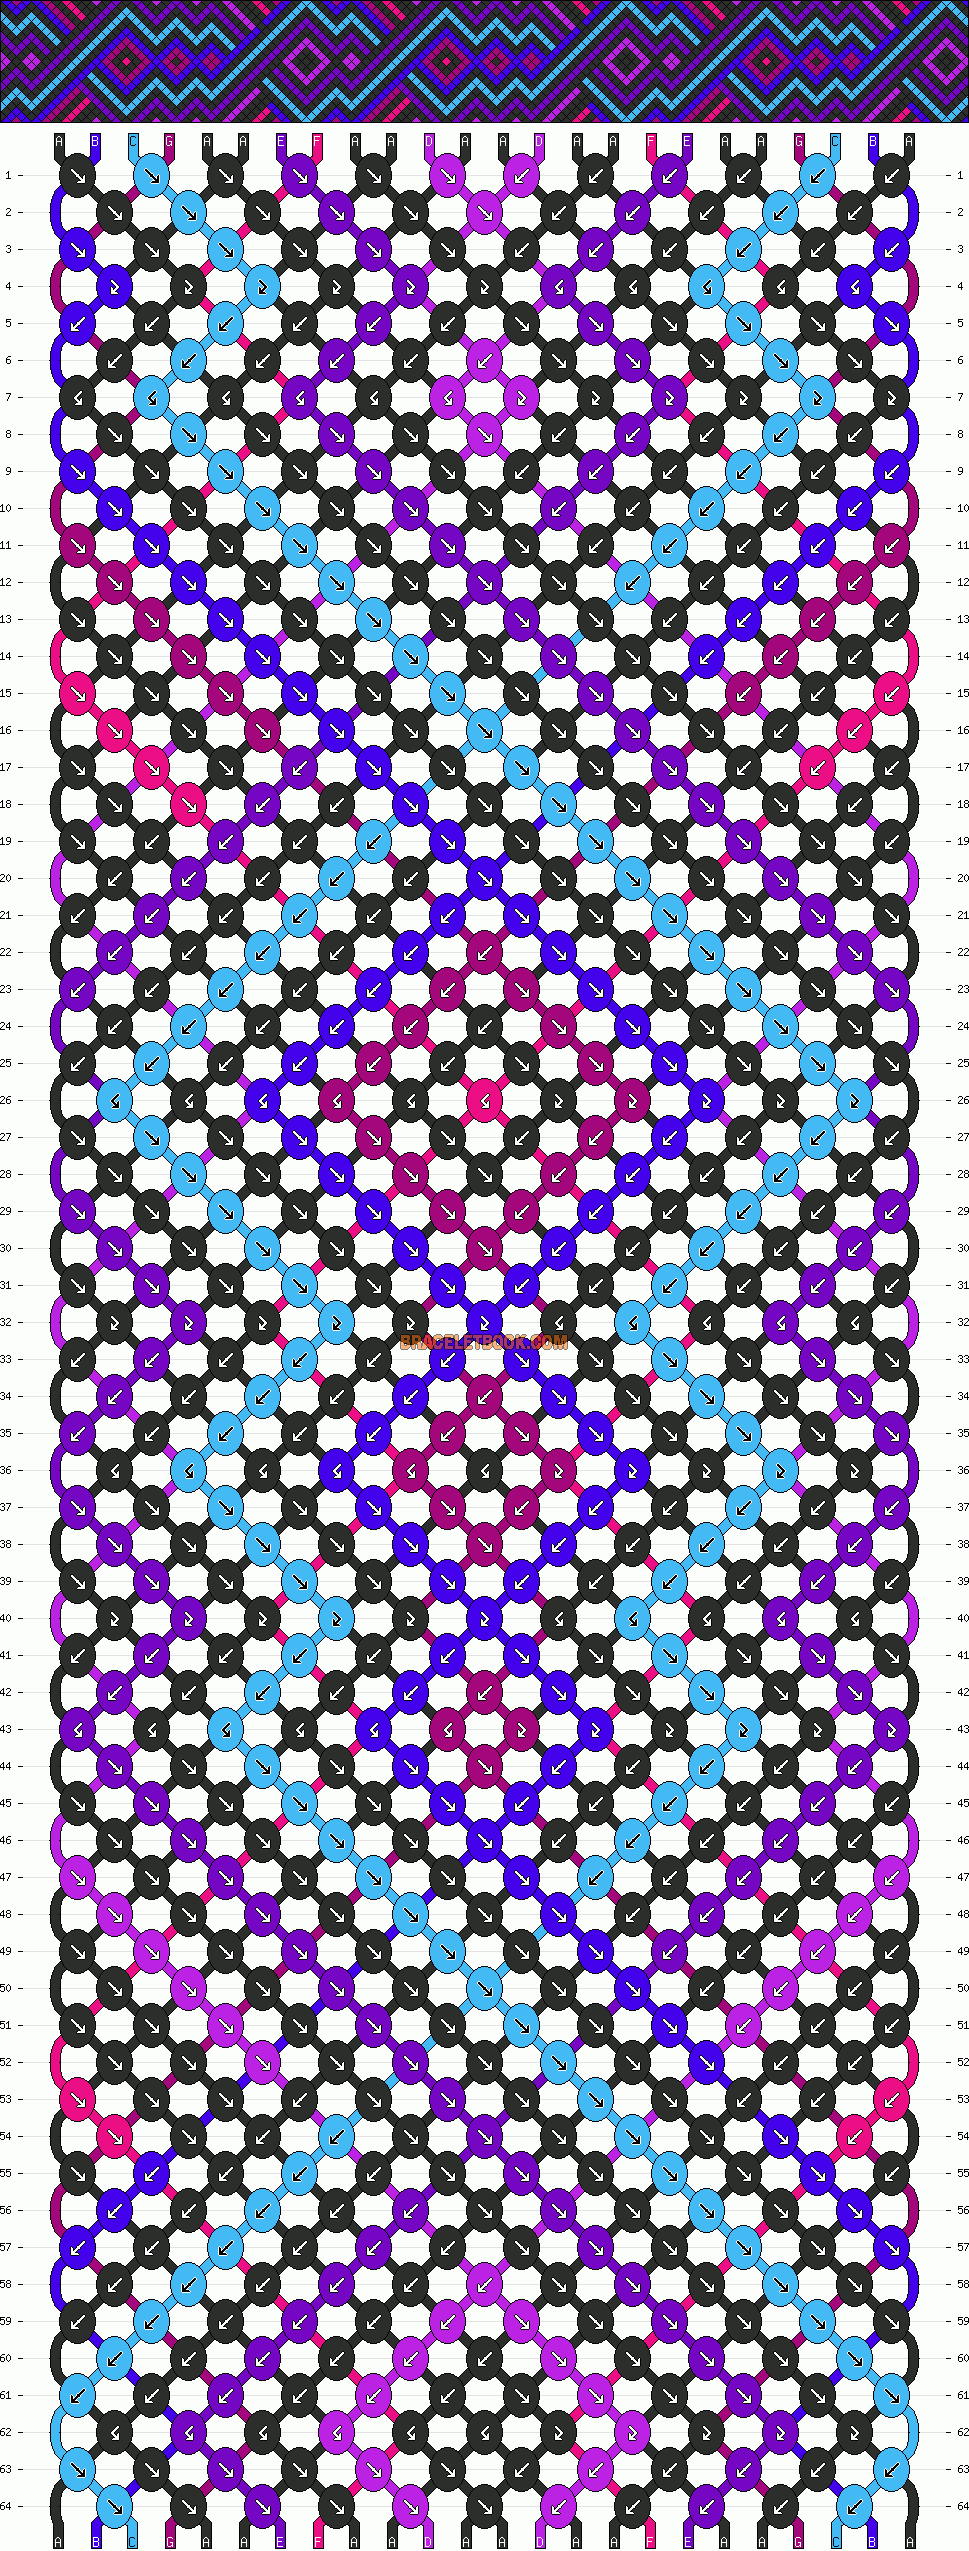 Normal Pattern #4459 added by beutysoul